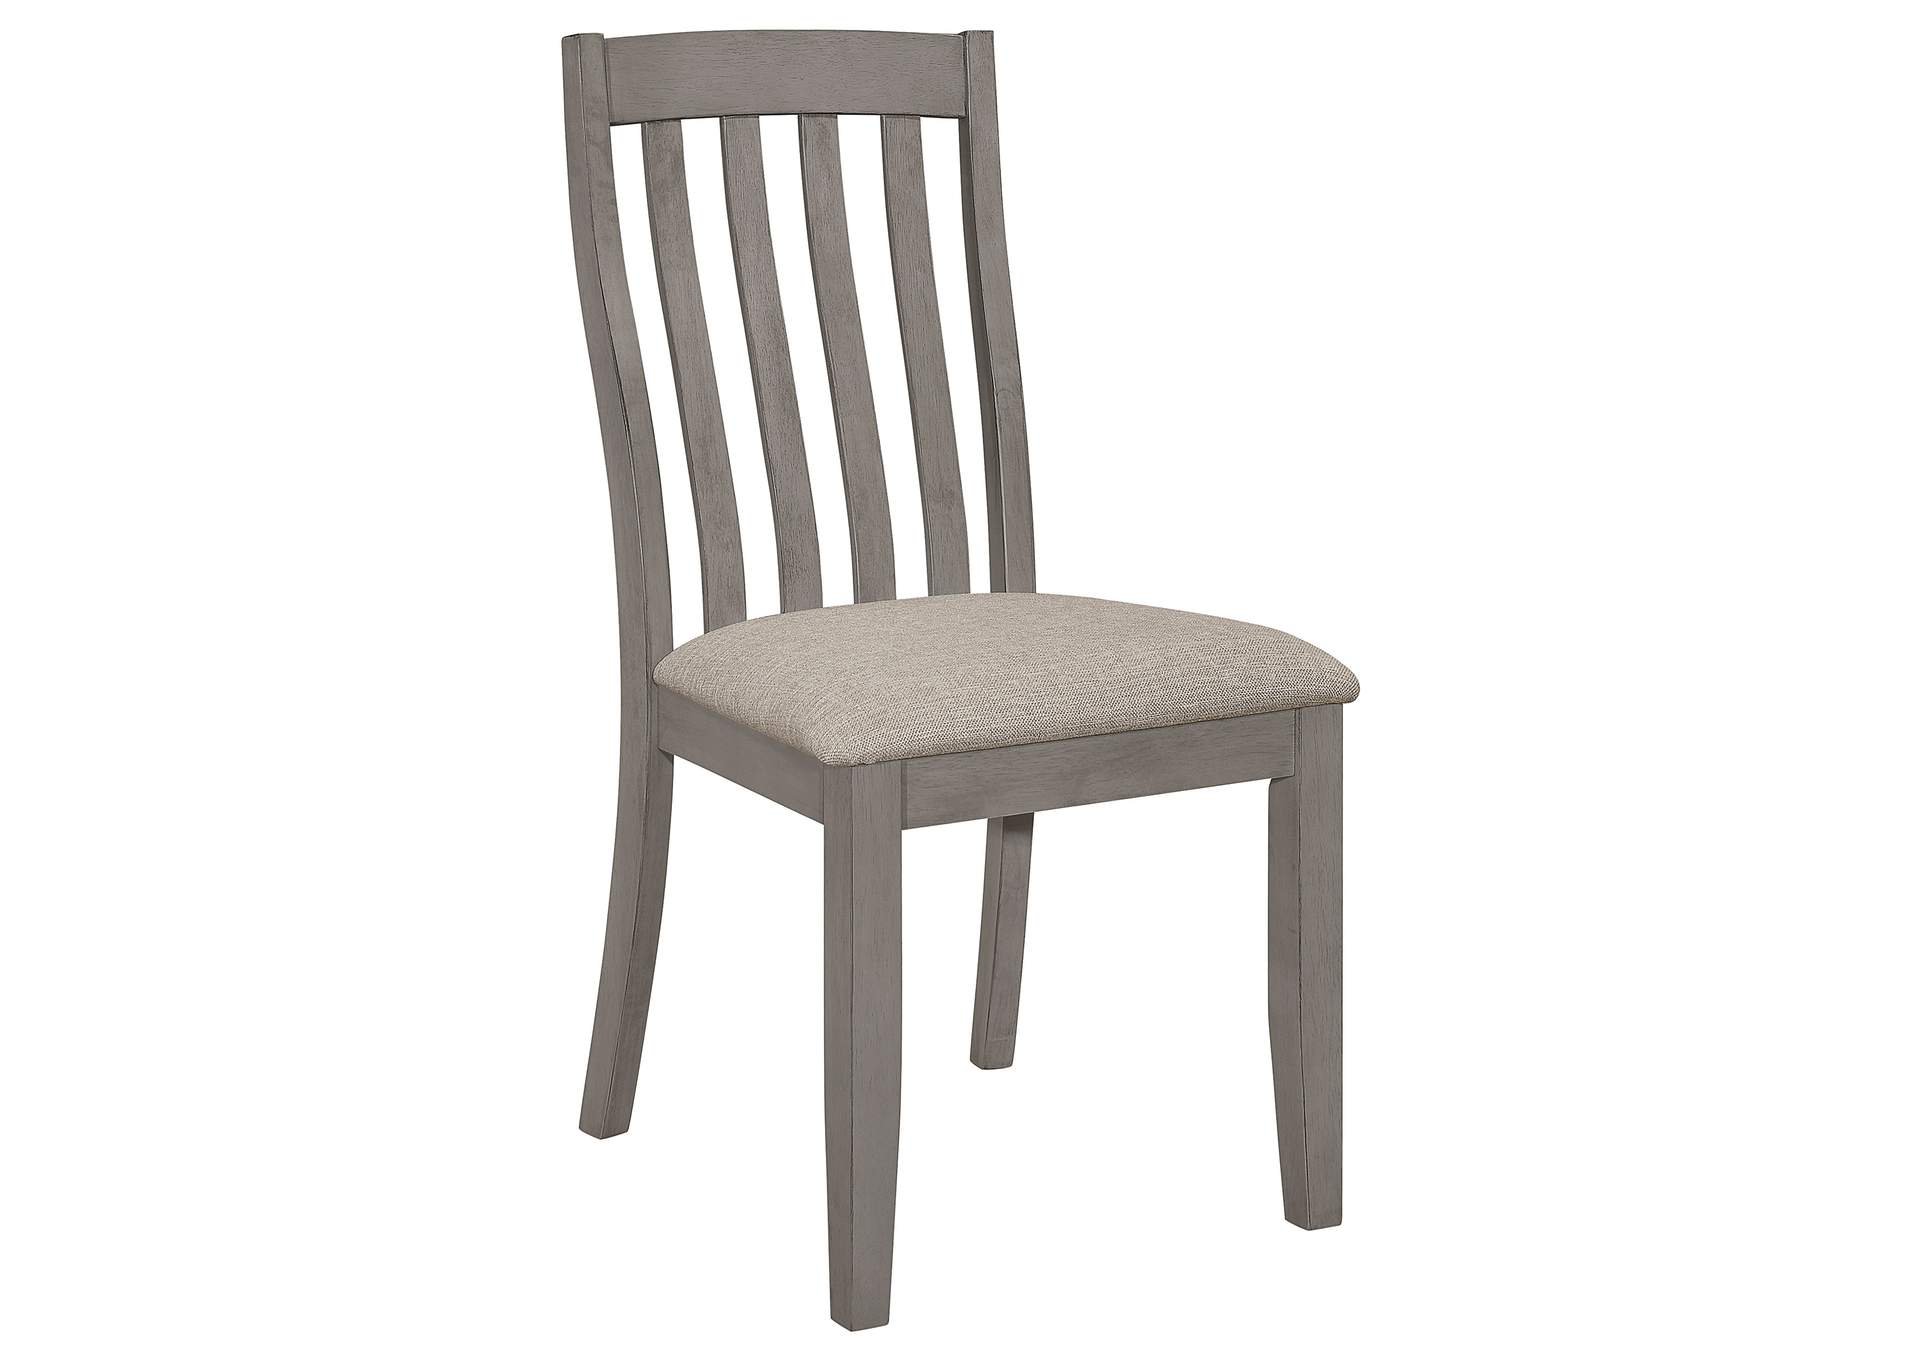 Nogales Slat Back Side Chairs Coastal Grey (Set of 2),Coaster Furniture